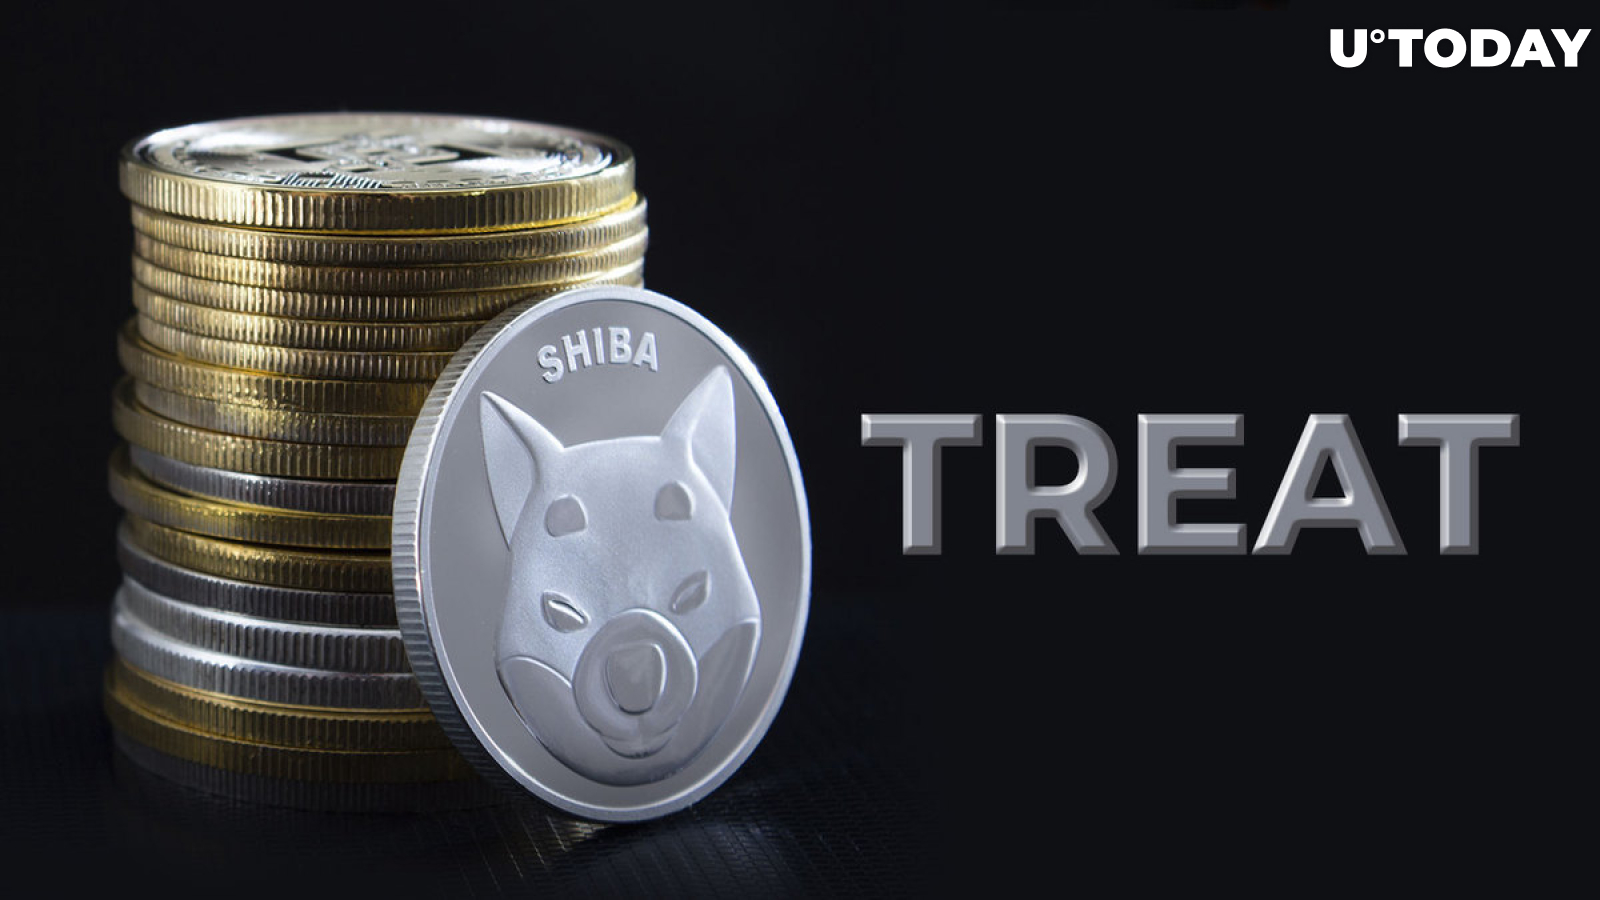 Shiba Inu Team Member Issues Critical Update on TREAT